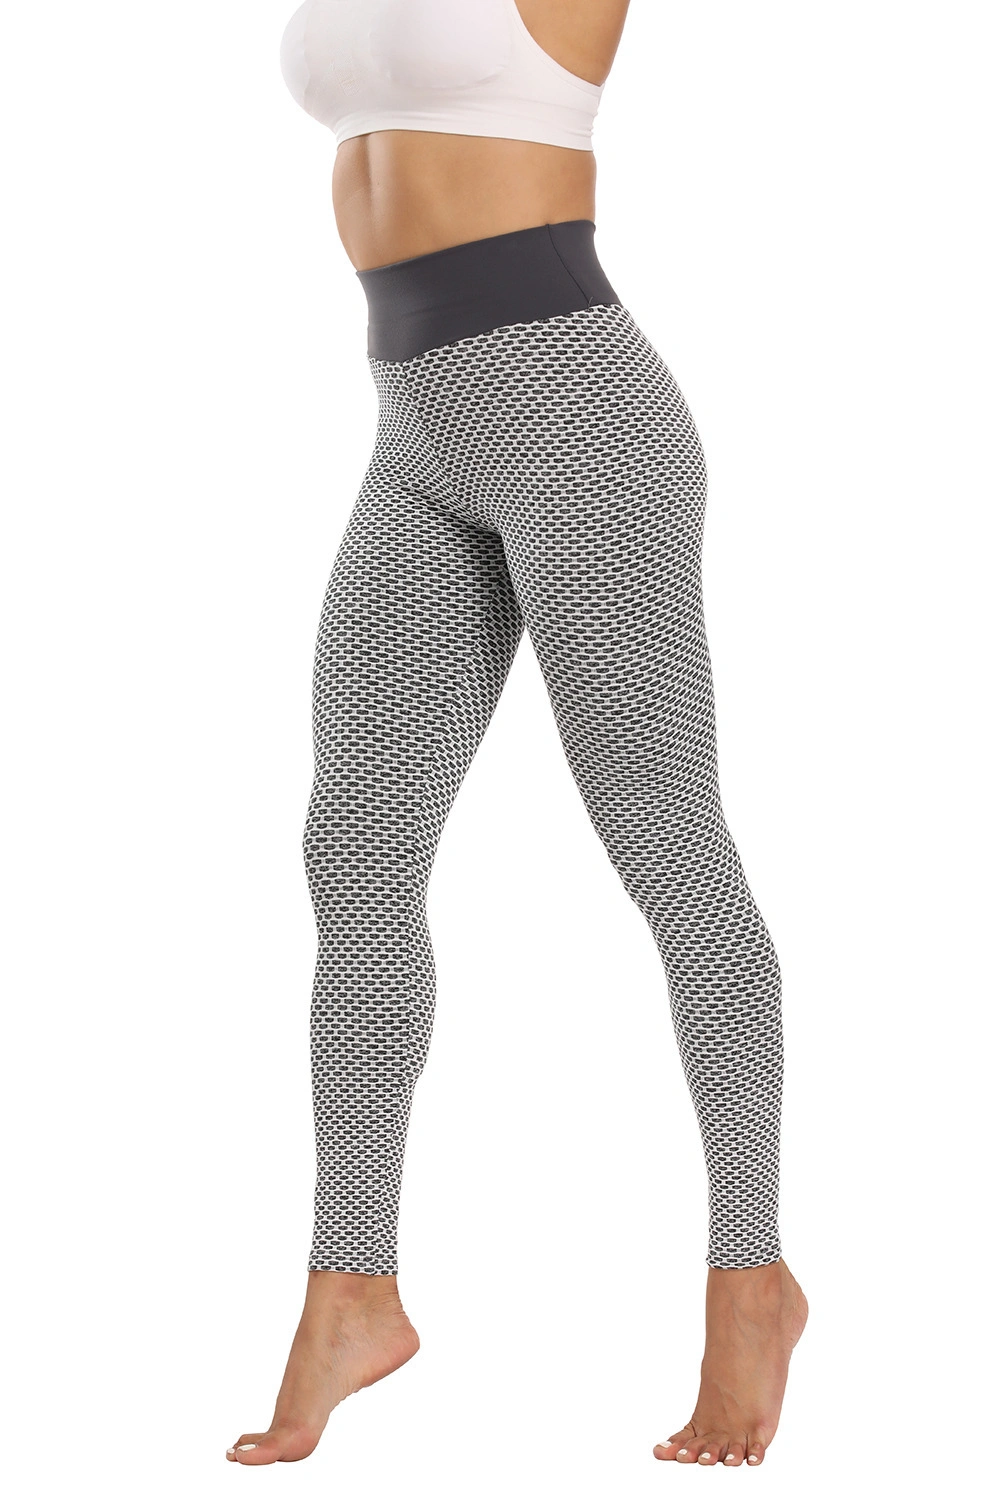 2022 Sports Women Beauty Yoga Clothing Knit Hing Waist Lift The HIPS High Elastic Long Running Sport Bubble Yoga Pants